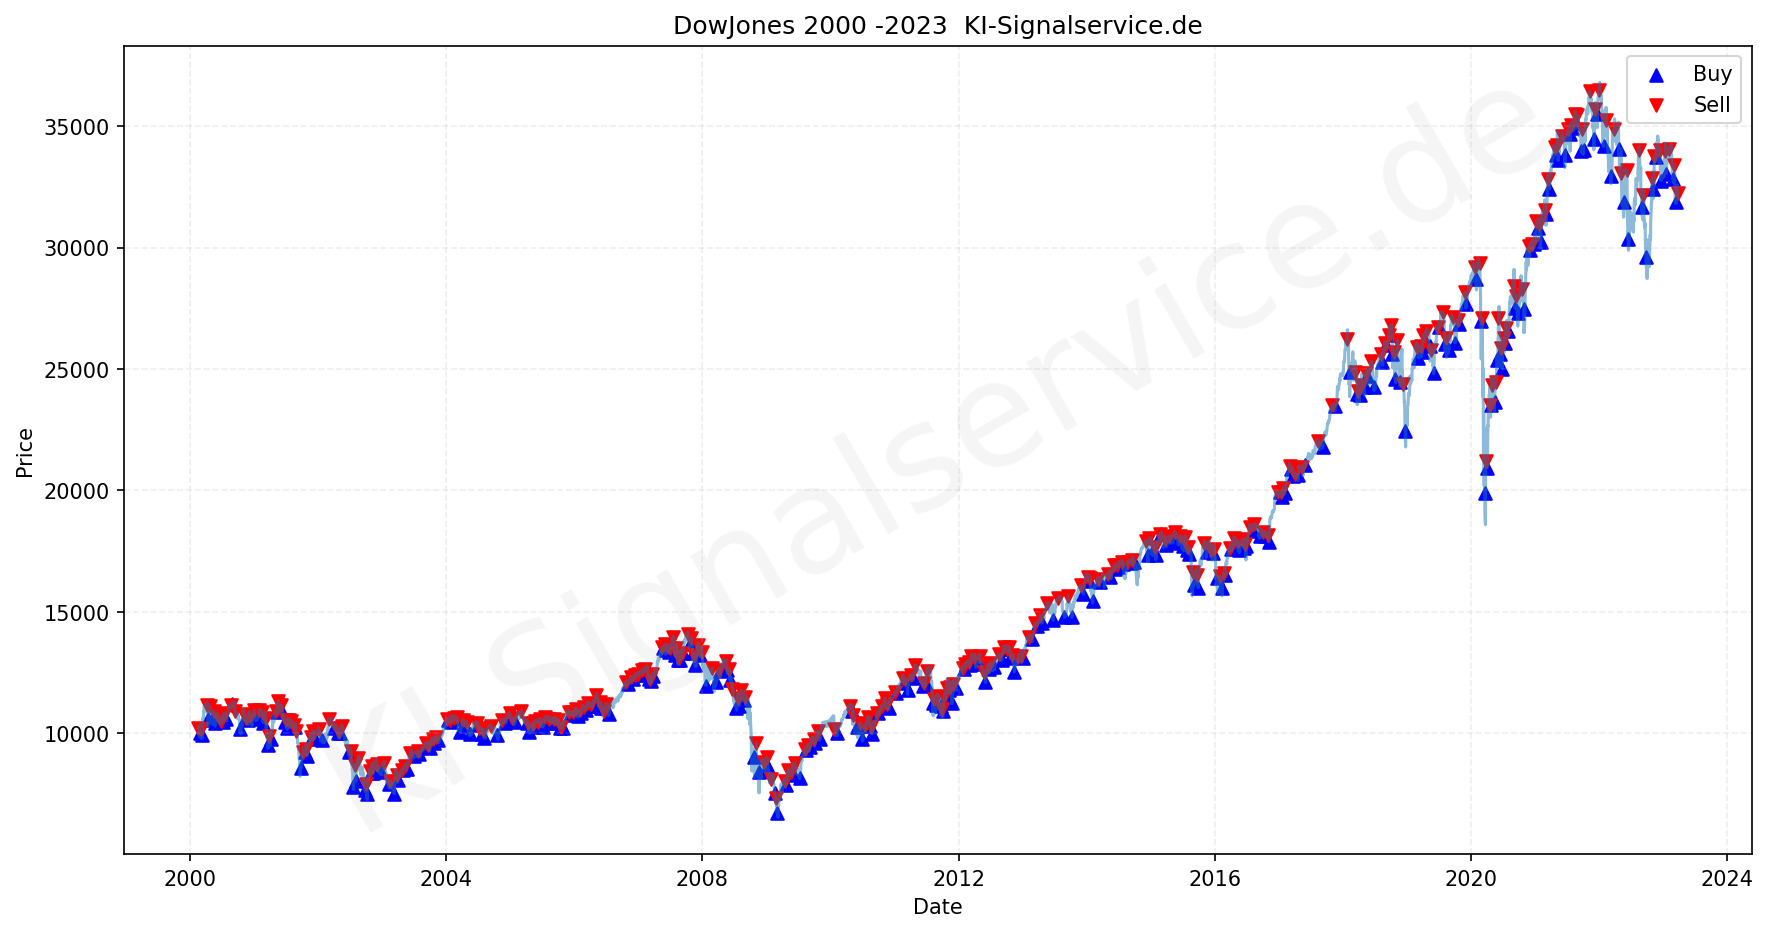 DOWJONES Index Performance Chart - KI Tradingsignale 2000-2022